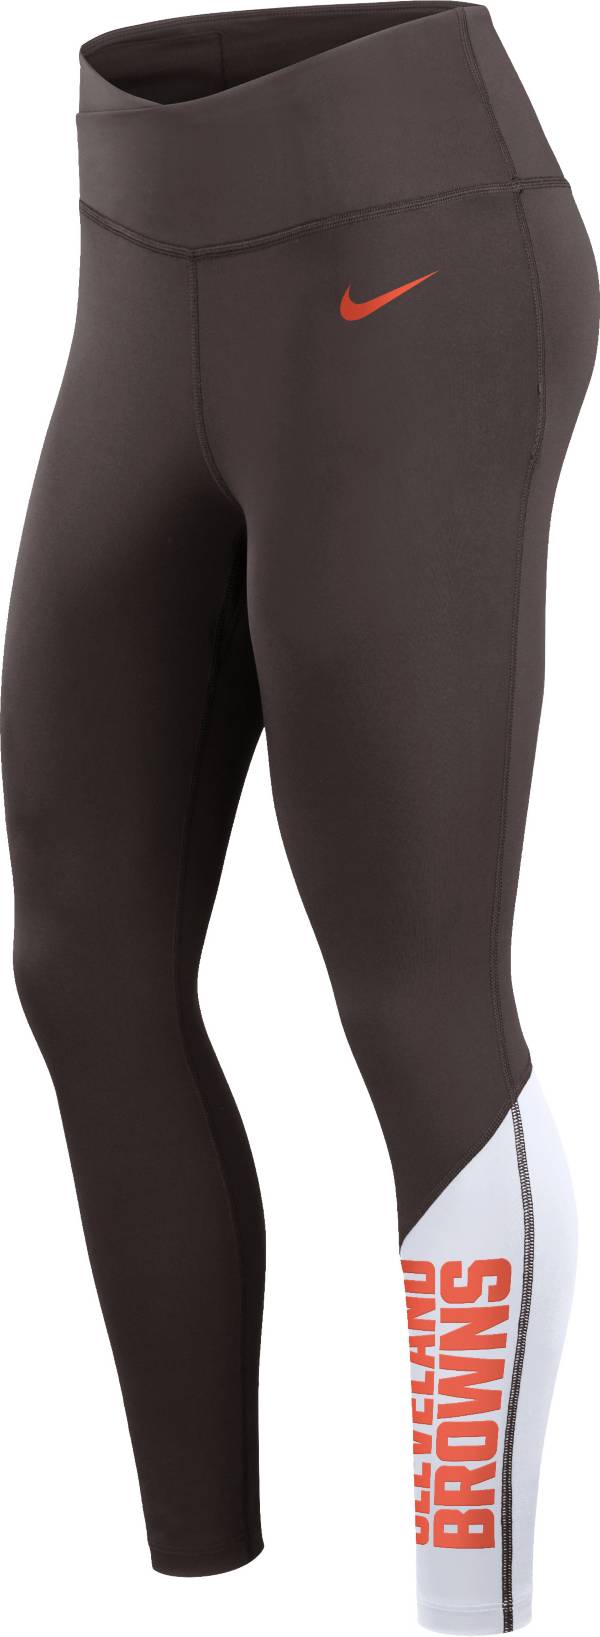 Nike Women's Cleveland Browns Wordmark Brown Leggings product image